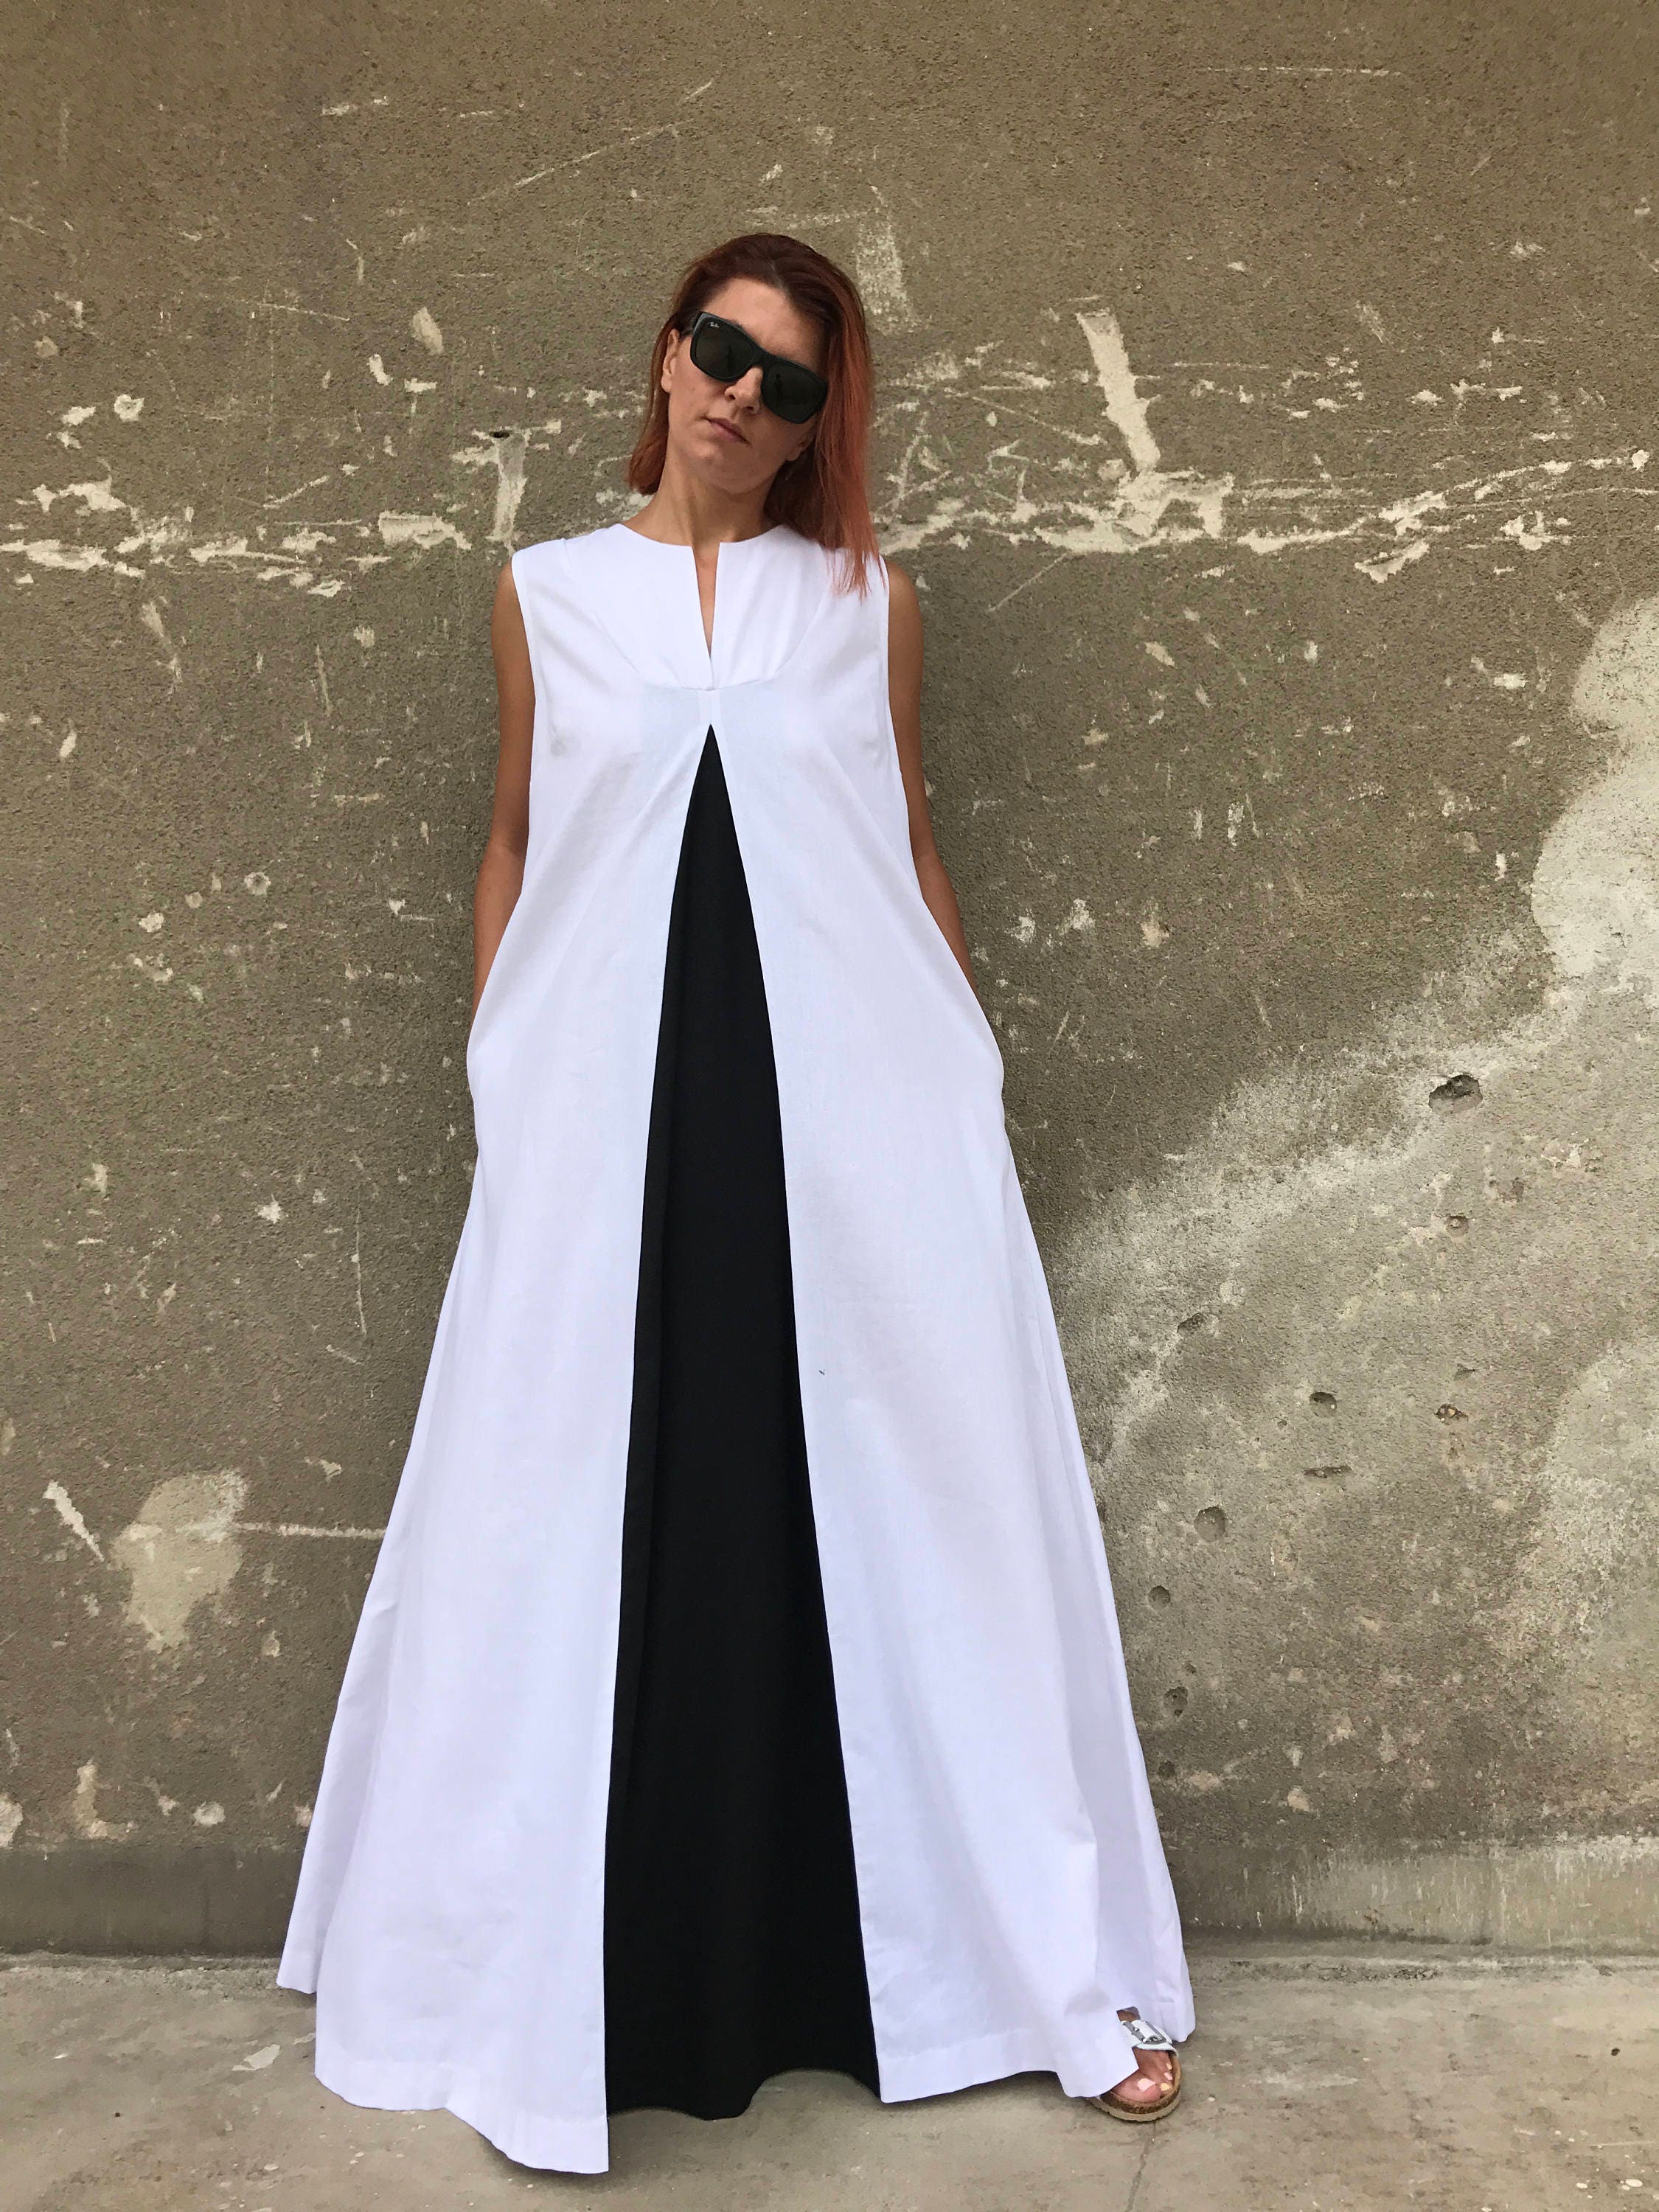 lærken smeltet stavelse White Linen Dress Plus Size Linen Dress Linen Maxi Dress - Etsy